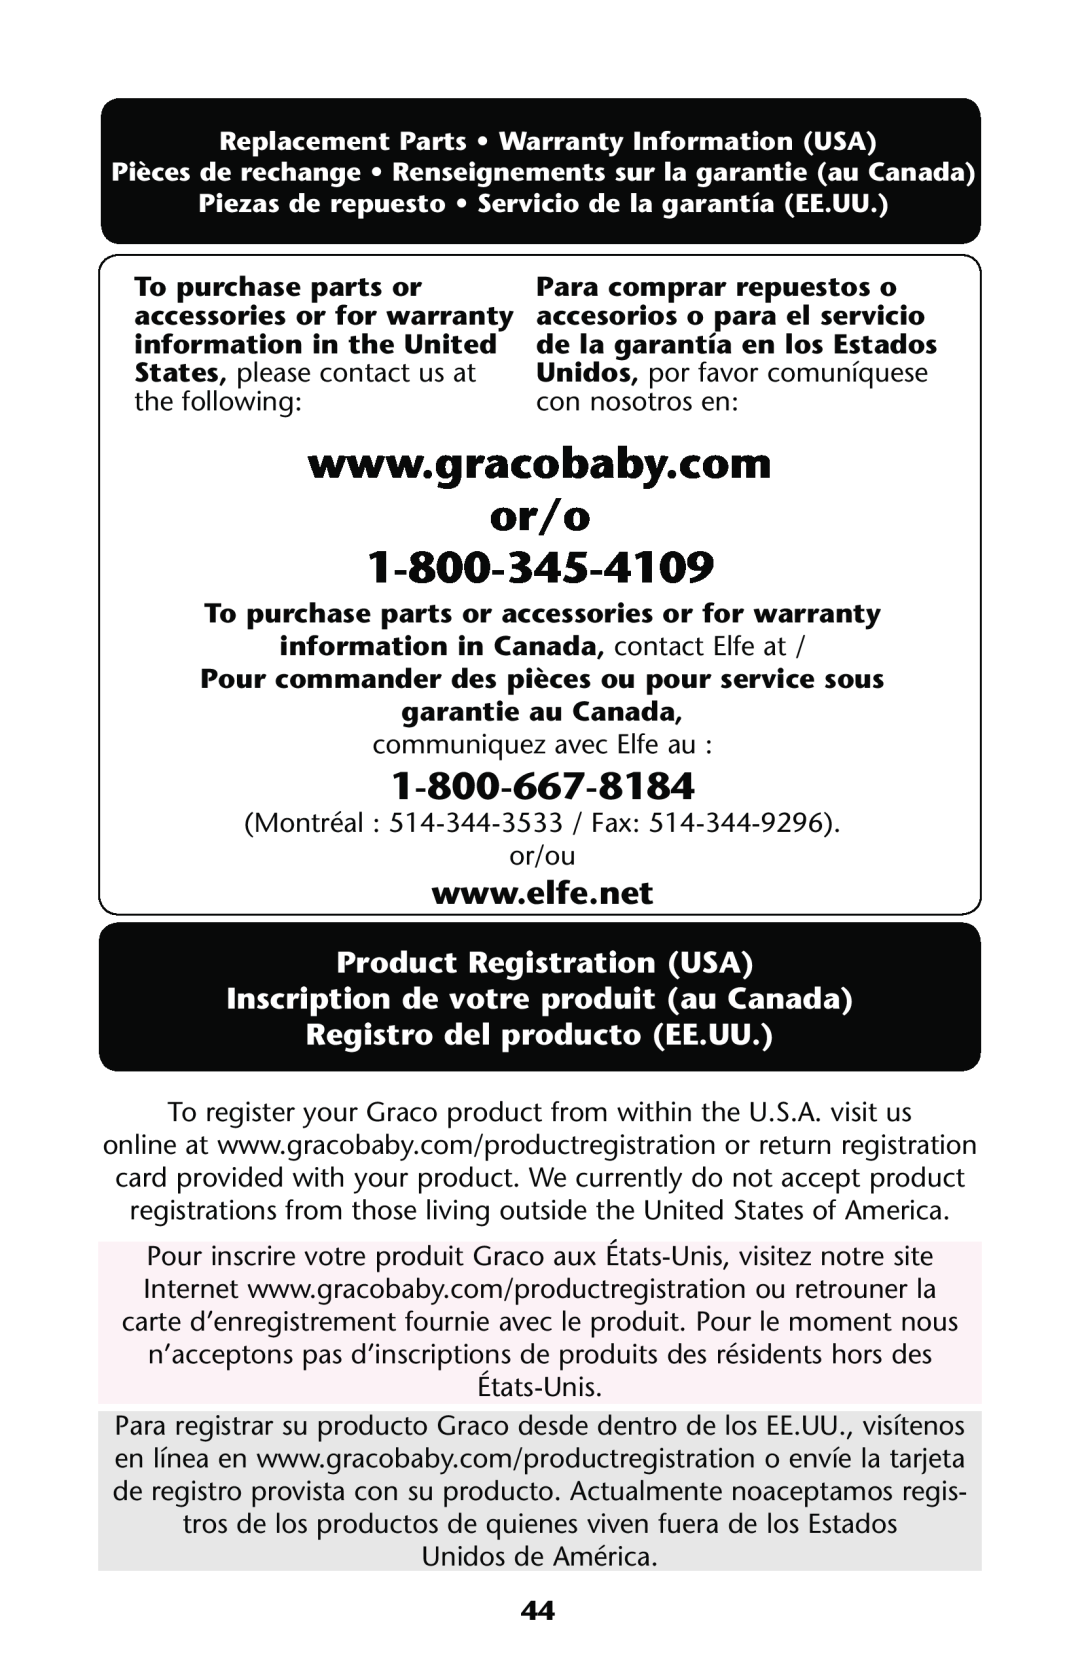 Graco PD137548A or/o, Product Registration USA Inscription de votre produit au Canada, Registro del producto EE.UU 